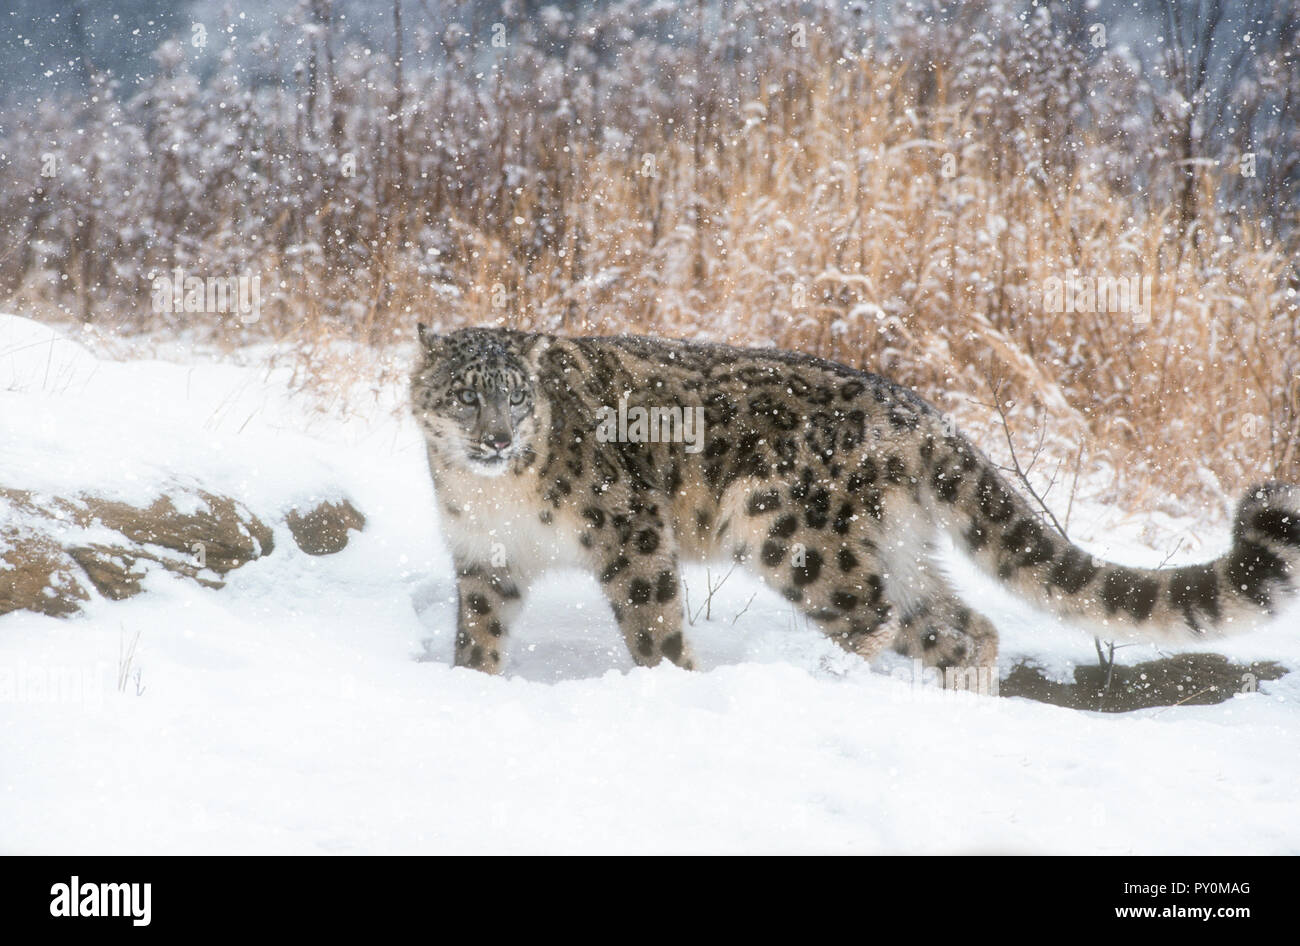 Snow Leopard; Big Cat; Predator; Winter;  Captive. Stock Photo